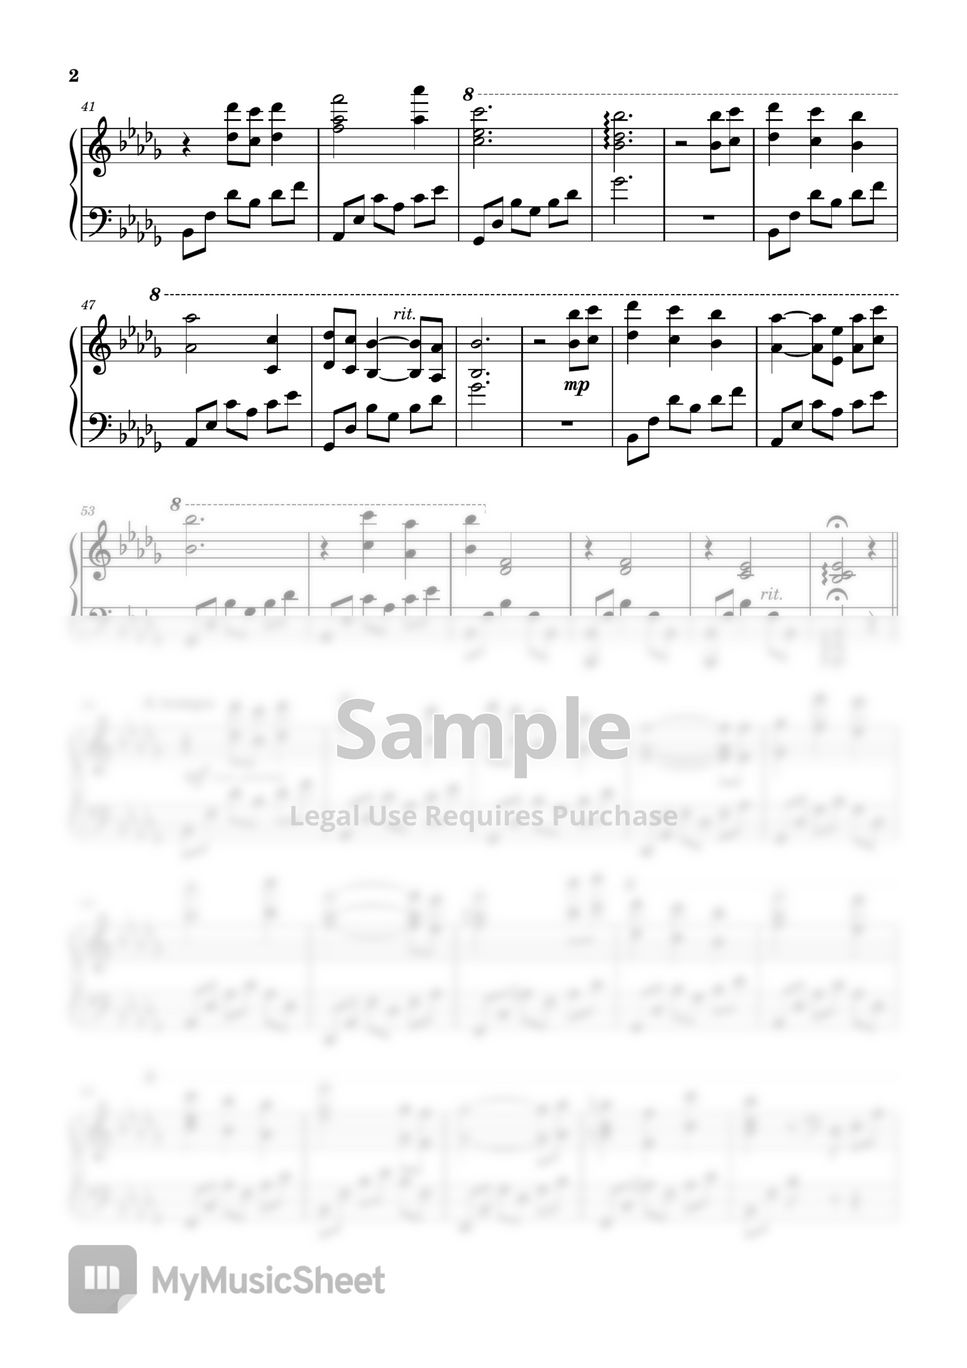 Abusey junction - Kokoroko Sheet music for Piano (Solo) Easy